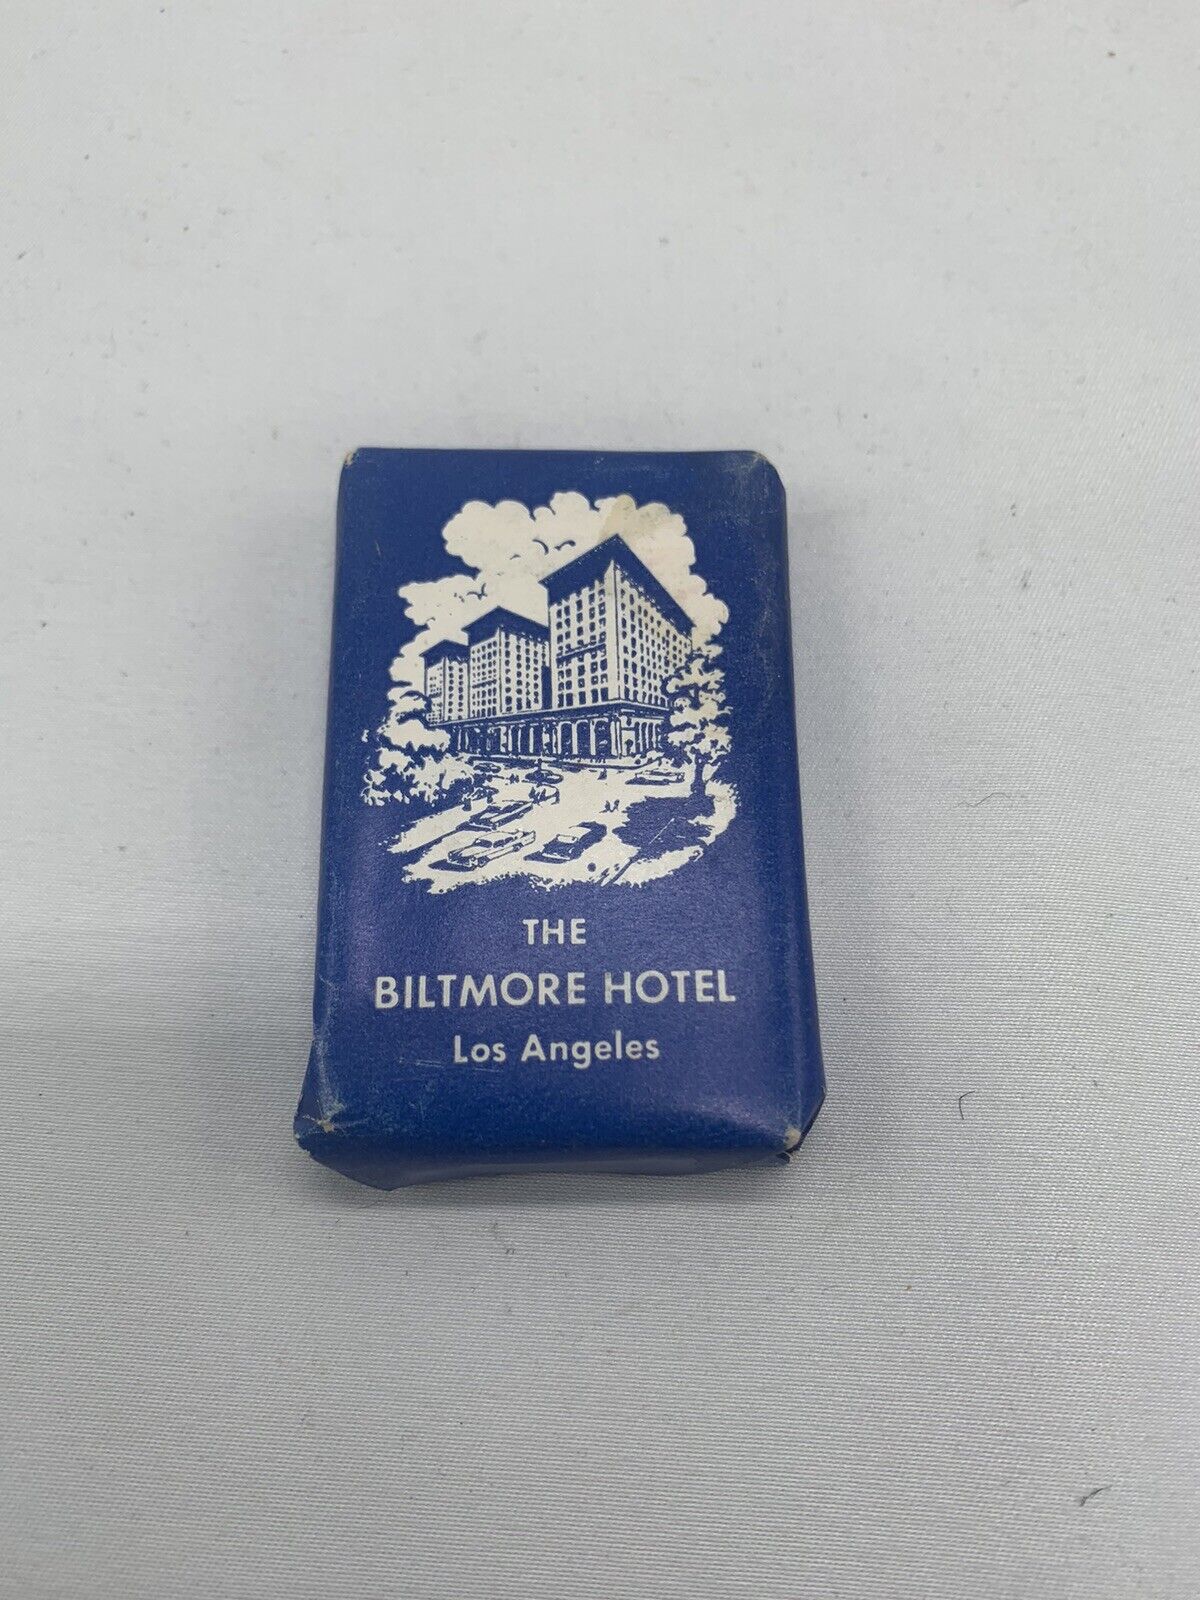 The Biltmore Hotel Los Angeles VINTAGE soap in original packaging RARE find